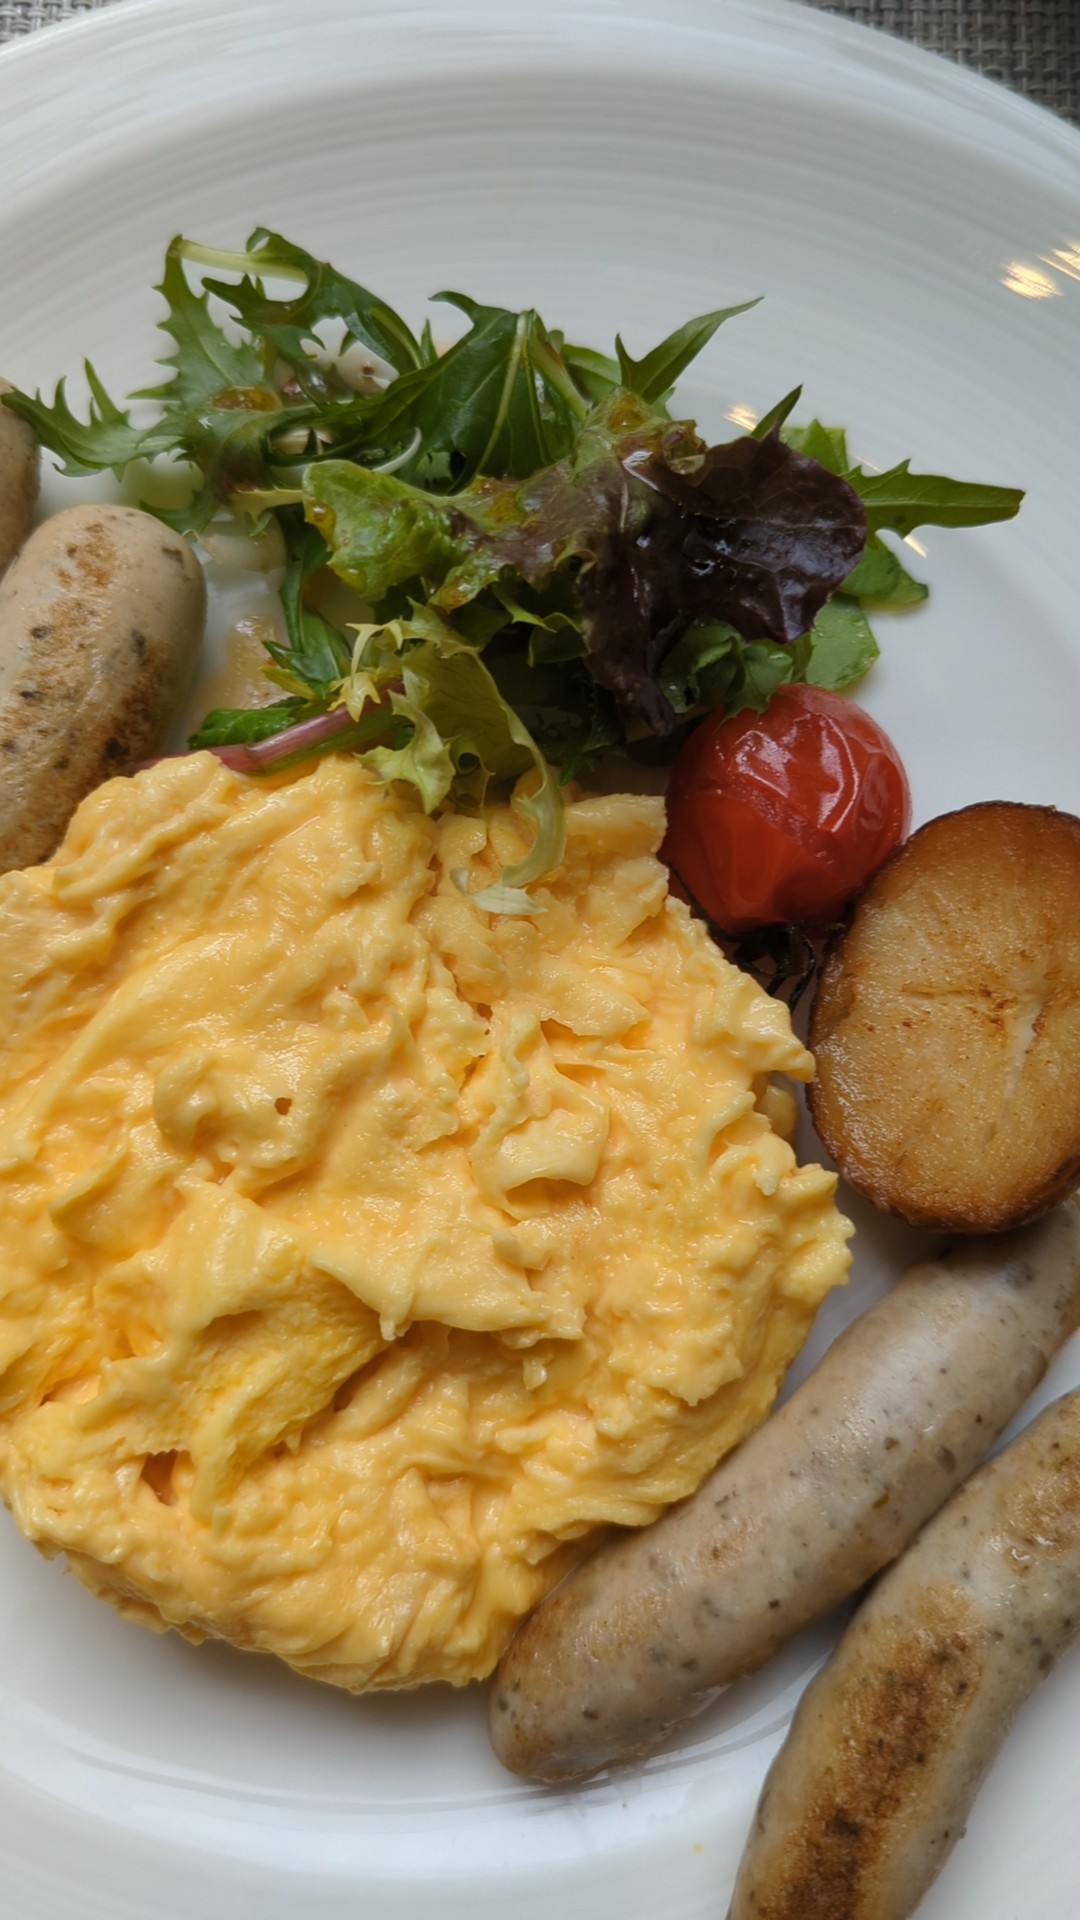 Brasserie Les Saveurs St. Regis, Singapore: Hotel Breakfast Review